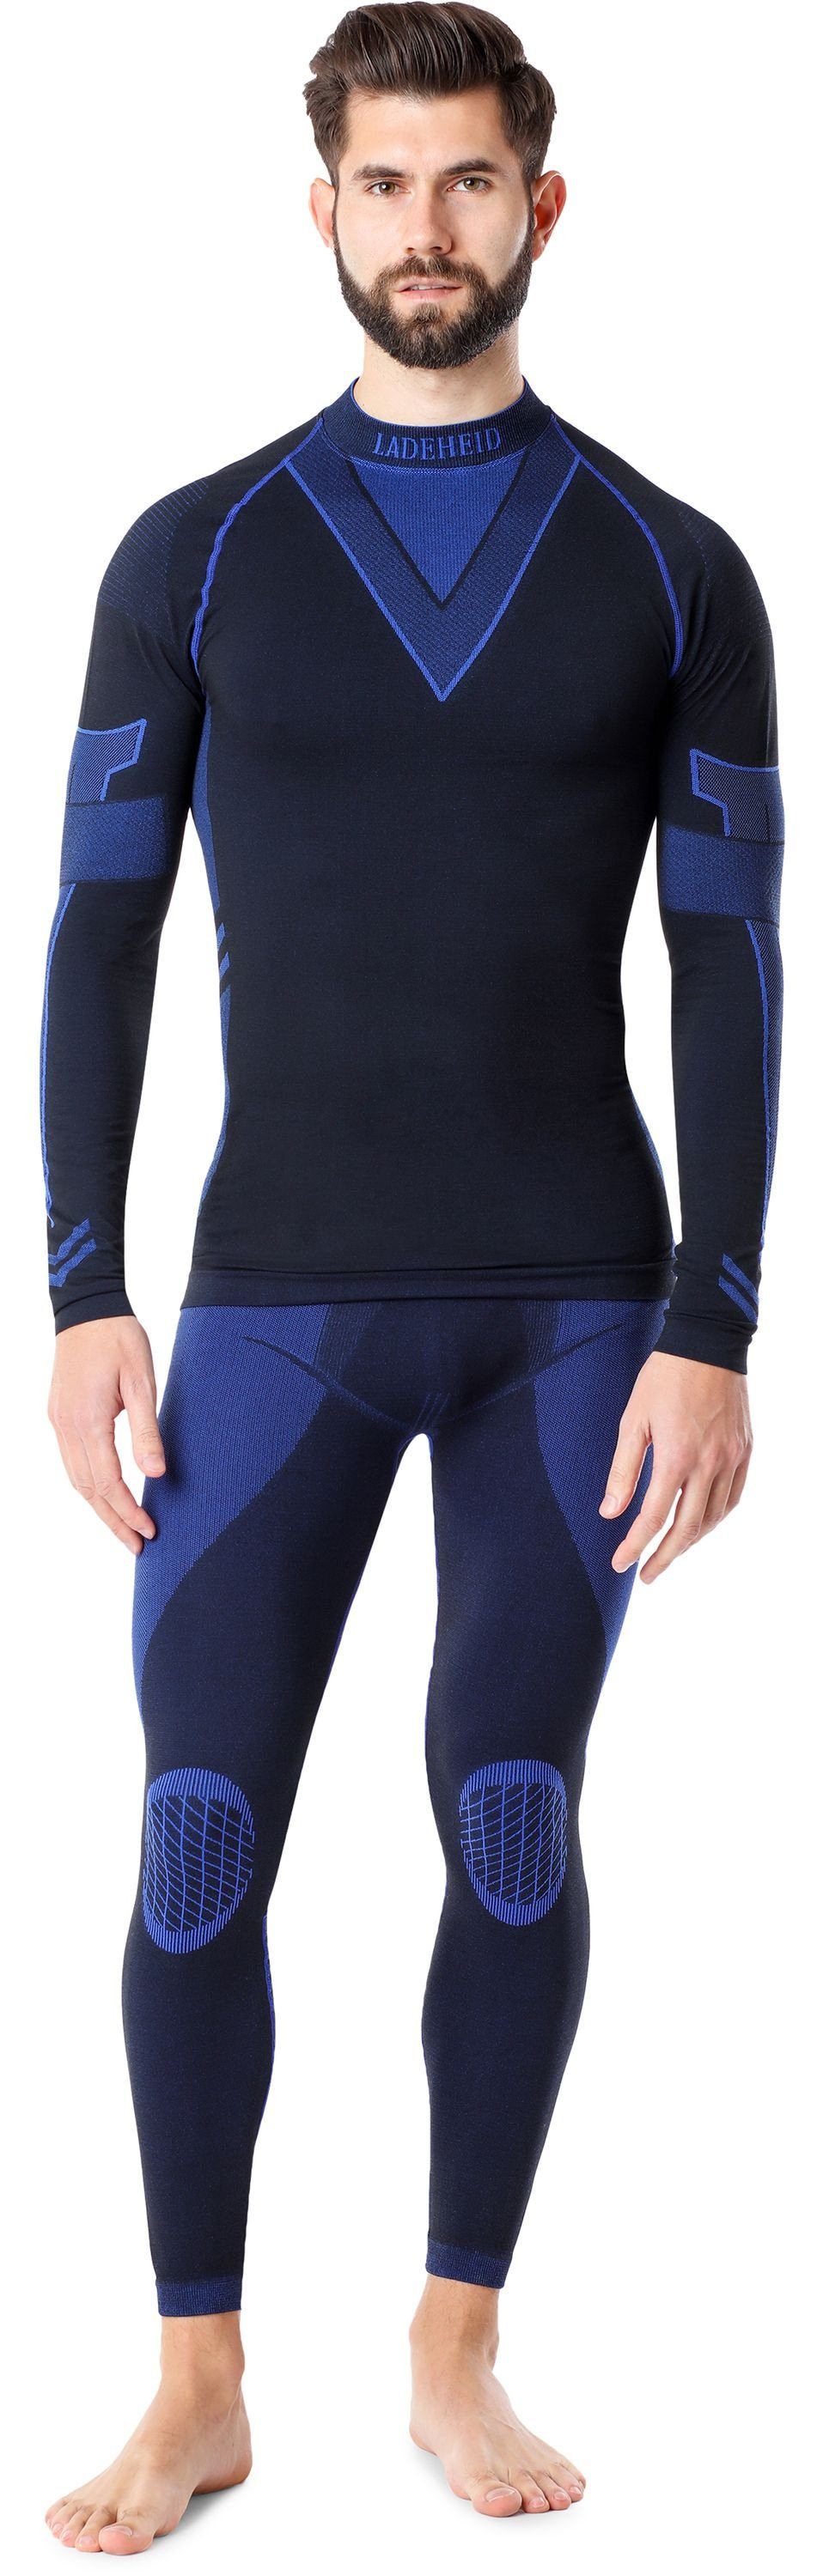 Ladeheid Funktionsunterhemd Herren Funktionsunterwäsche lang Shirt Unterhose Thermoaktiv LAGI003 (Set, mit Funktionsunterhose) Schwarz/Marineblau